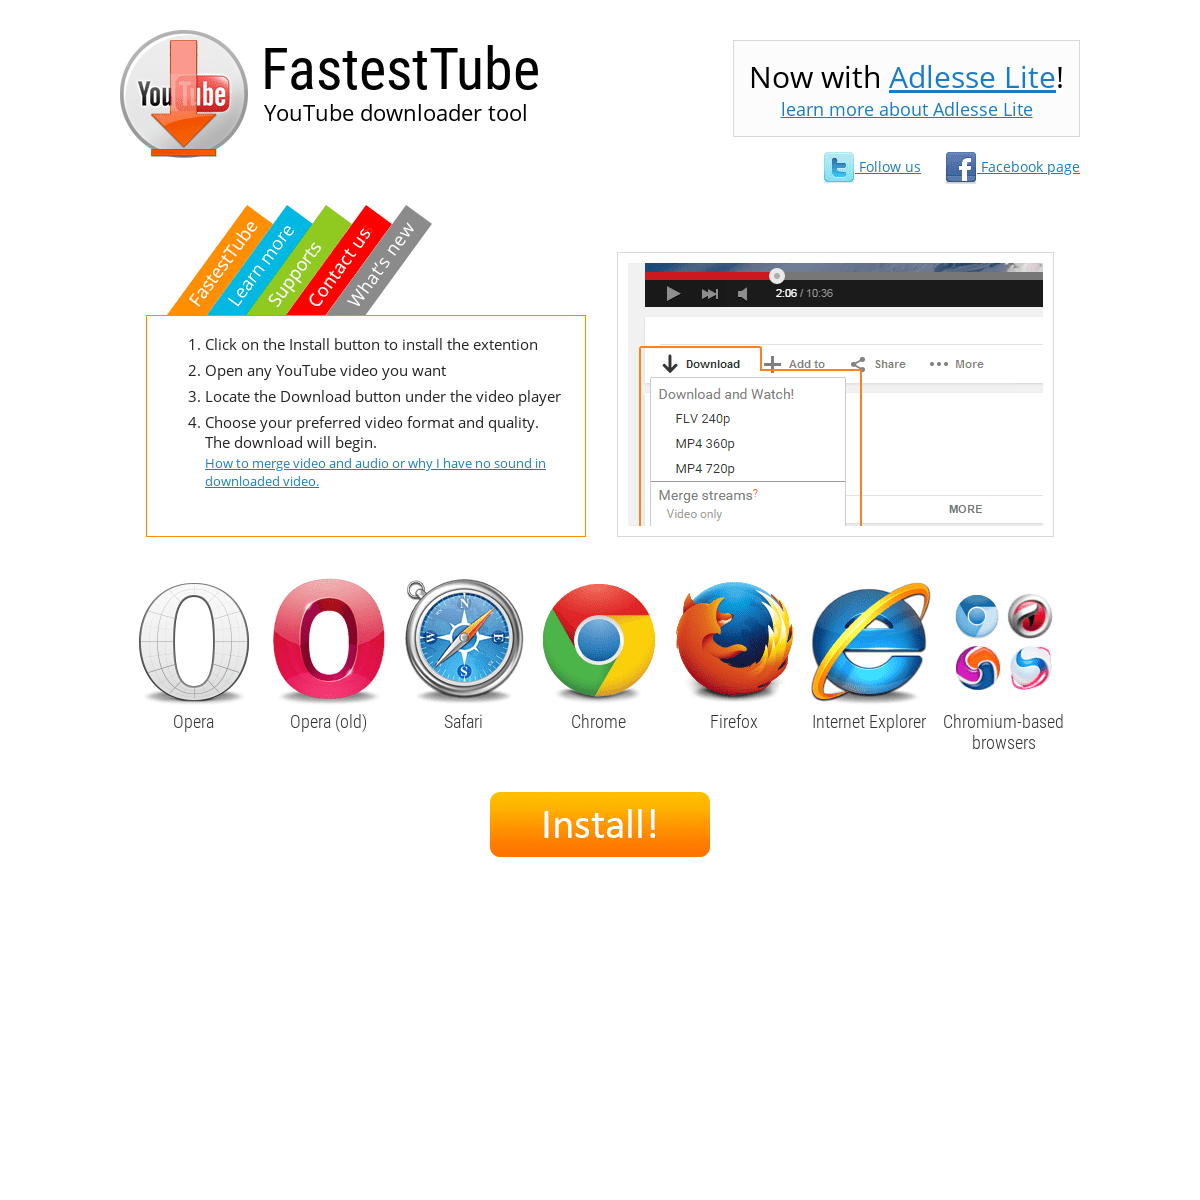 YouTube downloader tool - Fastesttube!